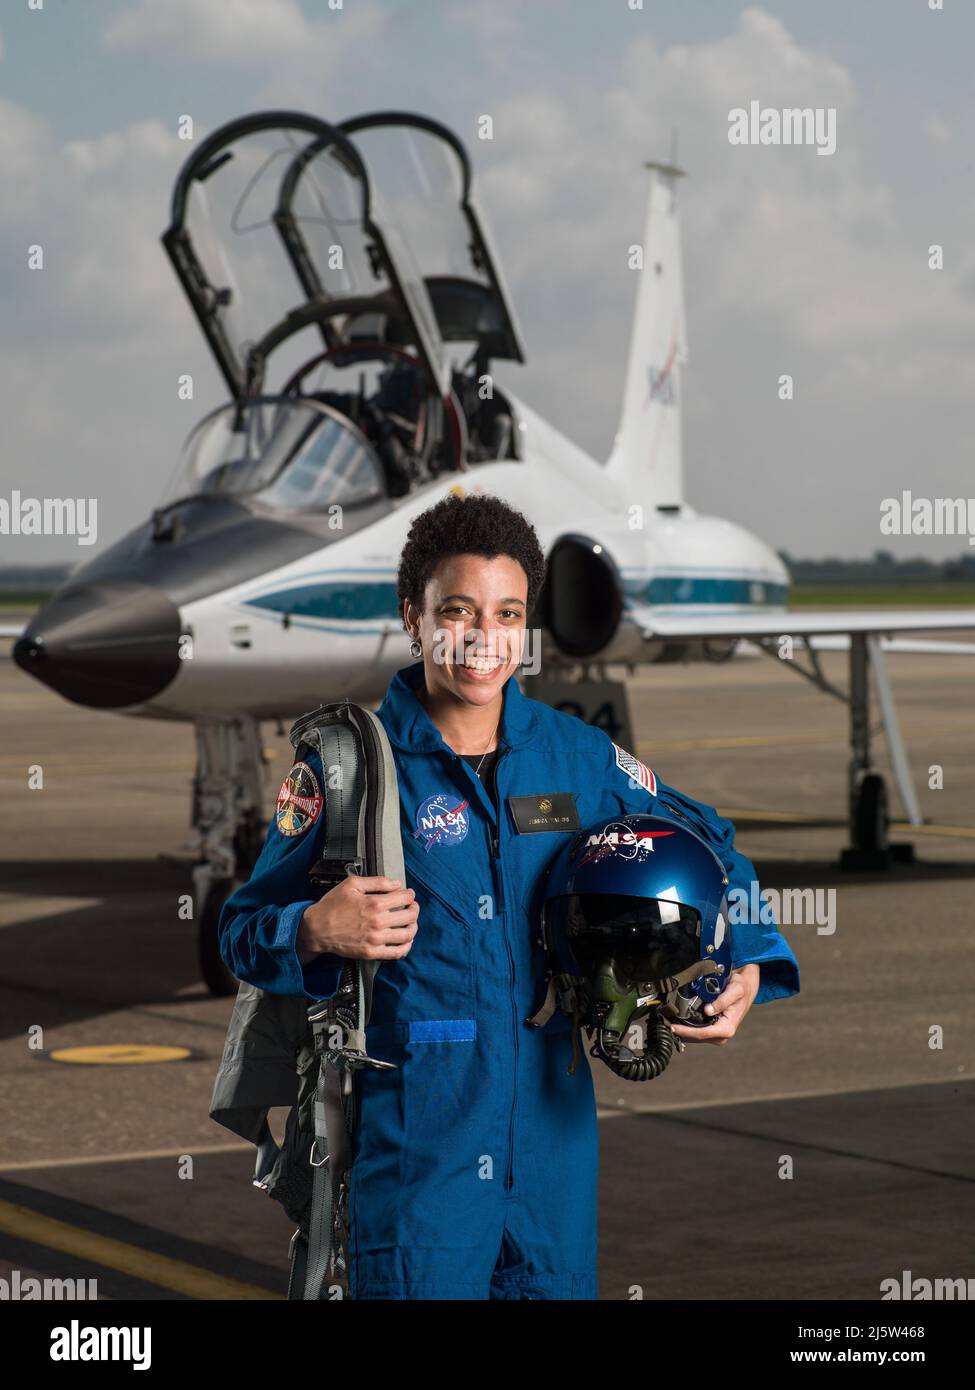 2017 NASA-Astronautenkandidatin - Jessica Watkins. Foto Datum: 6. Juni 2017. Lage: Ellington Field - Hangar 276, Tarmac. Fotograf: Robert Markowitz Stockfoto